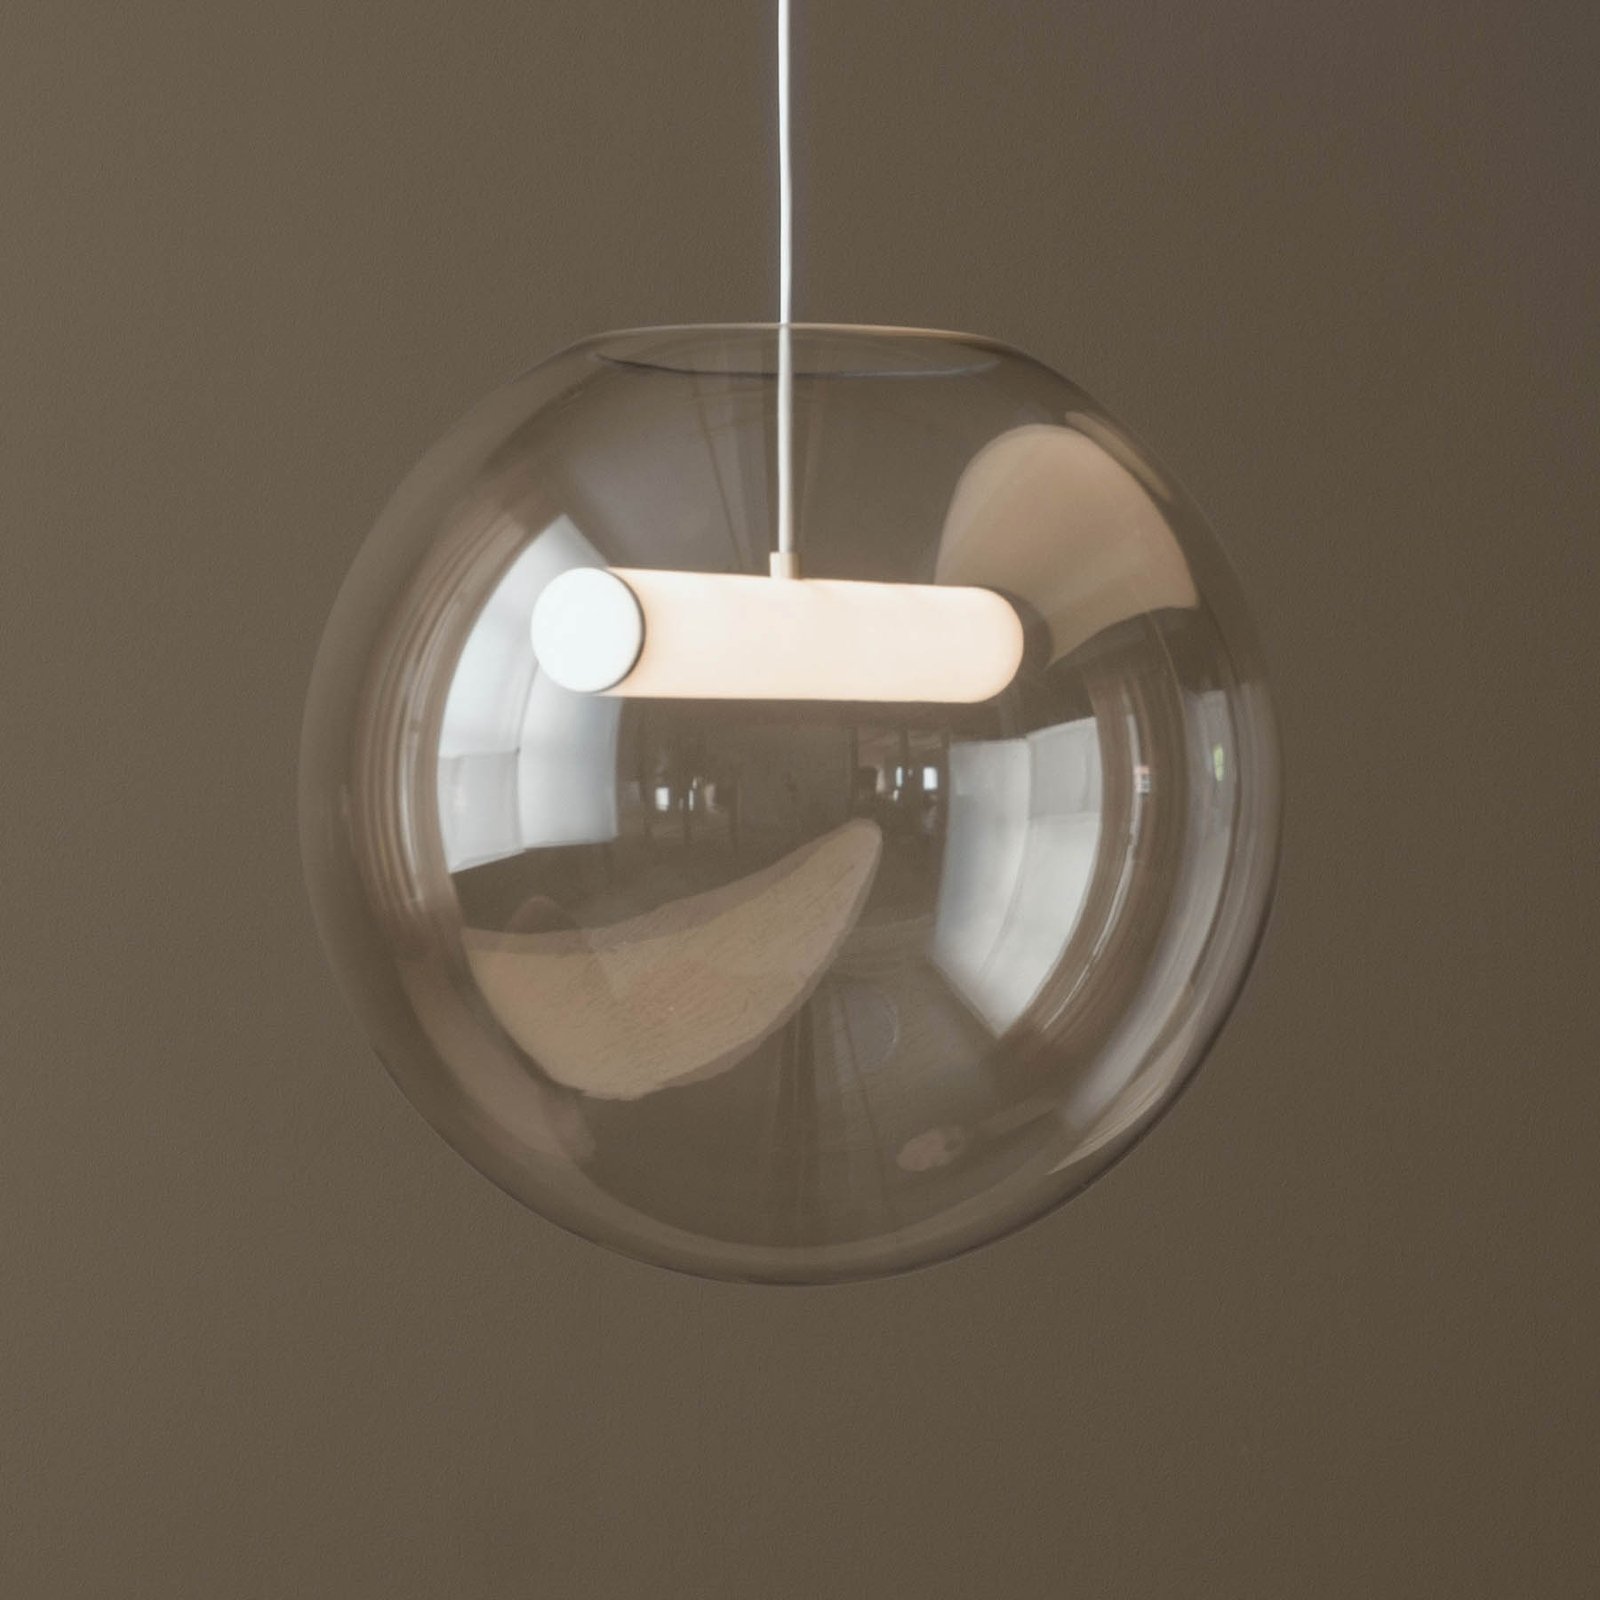 Northern Reveal LED sospensione vetro fumè Ø 45 cm